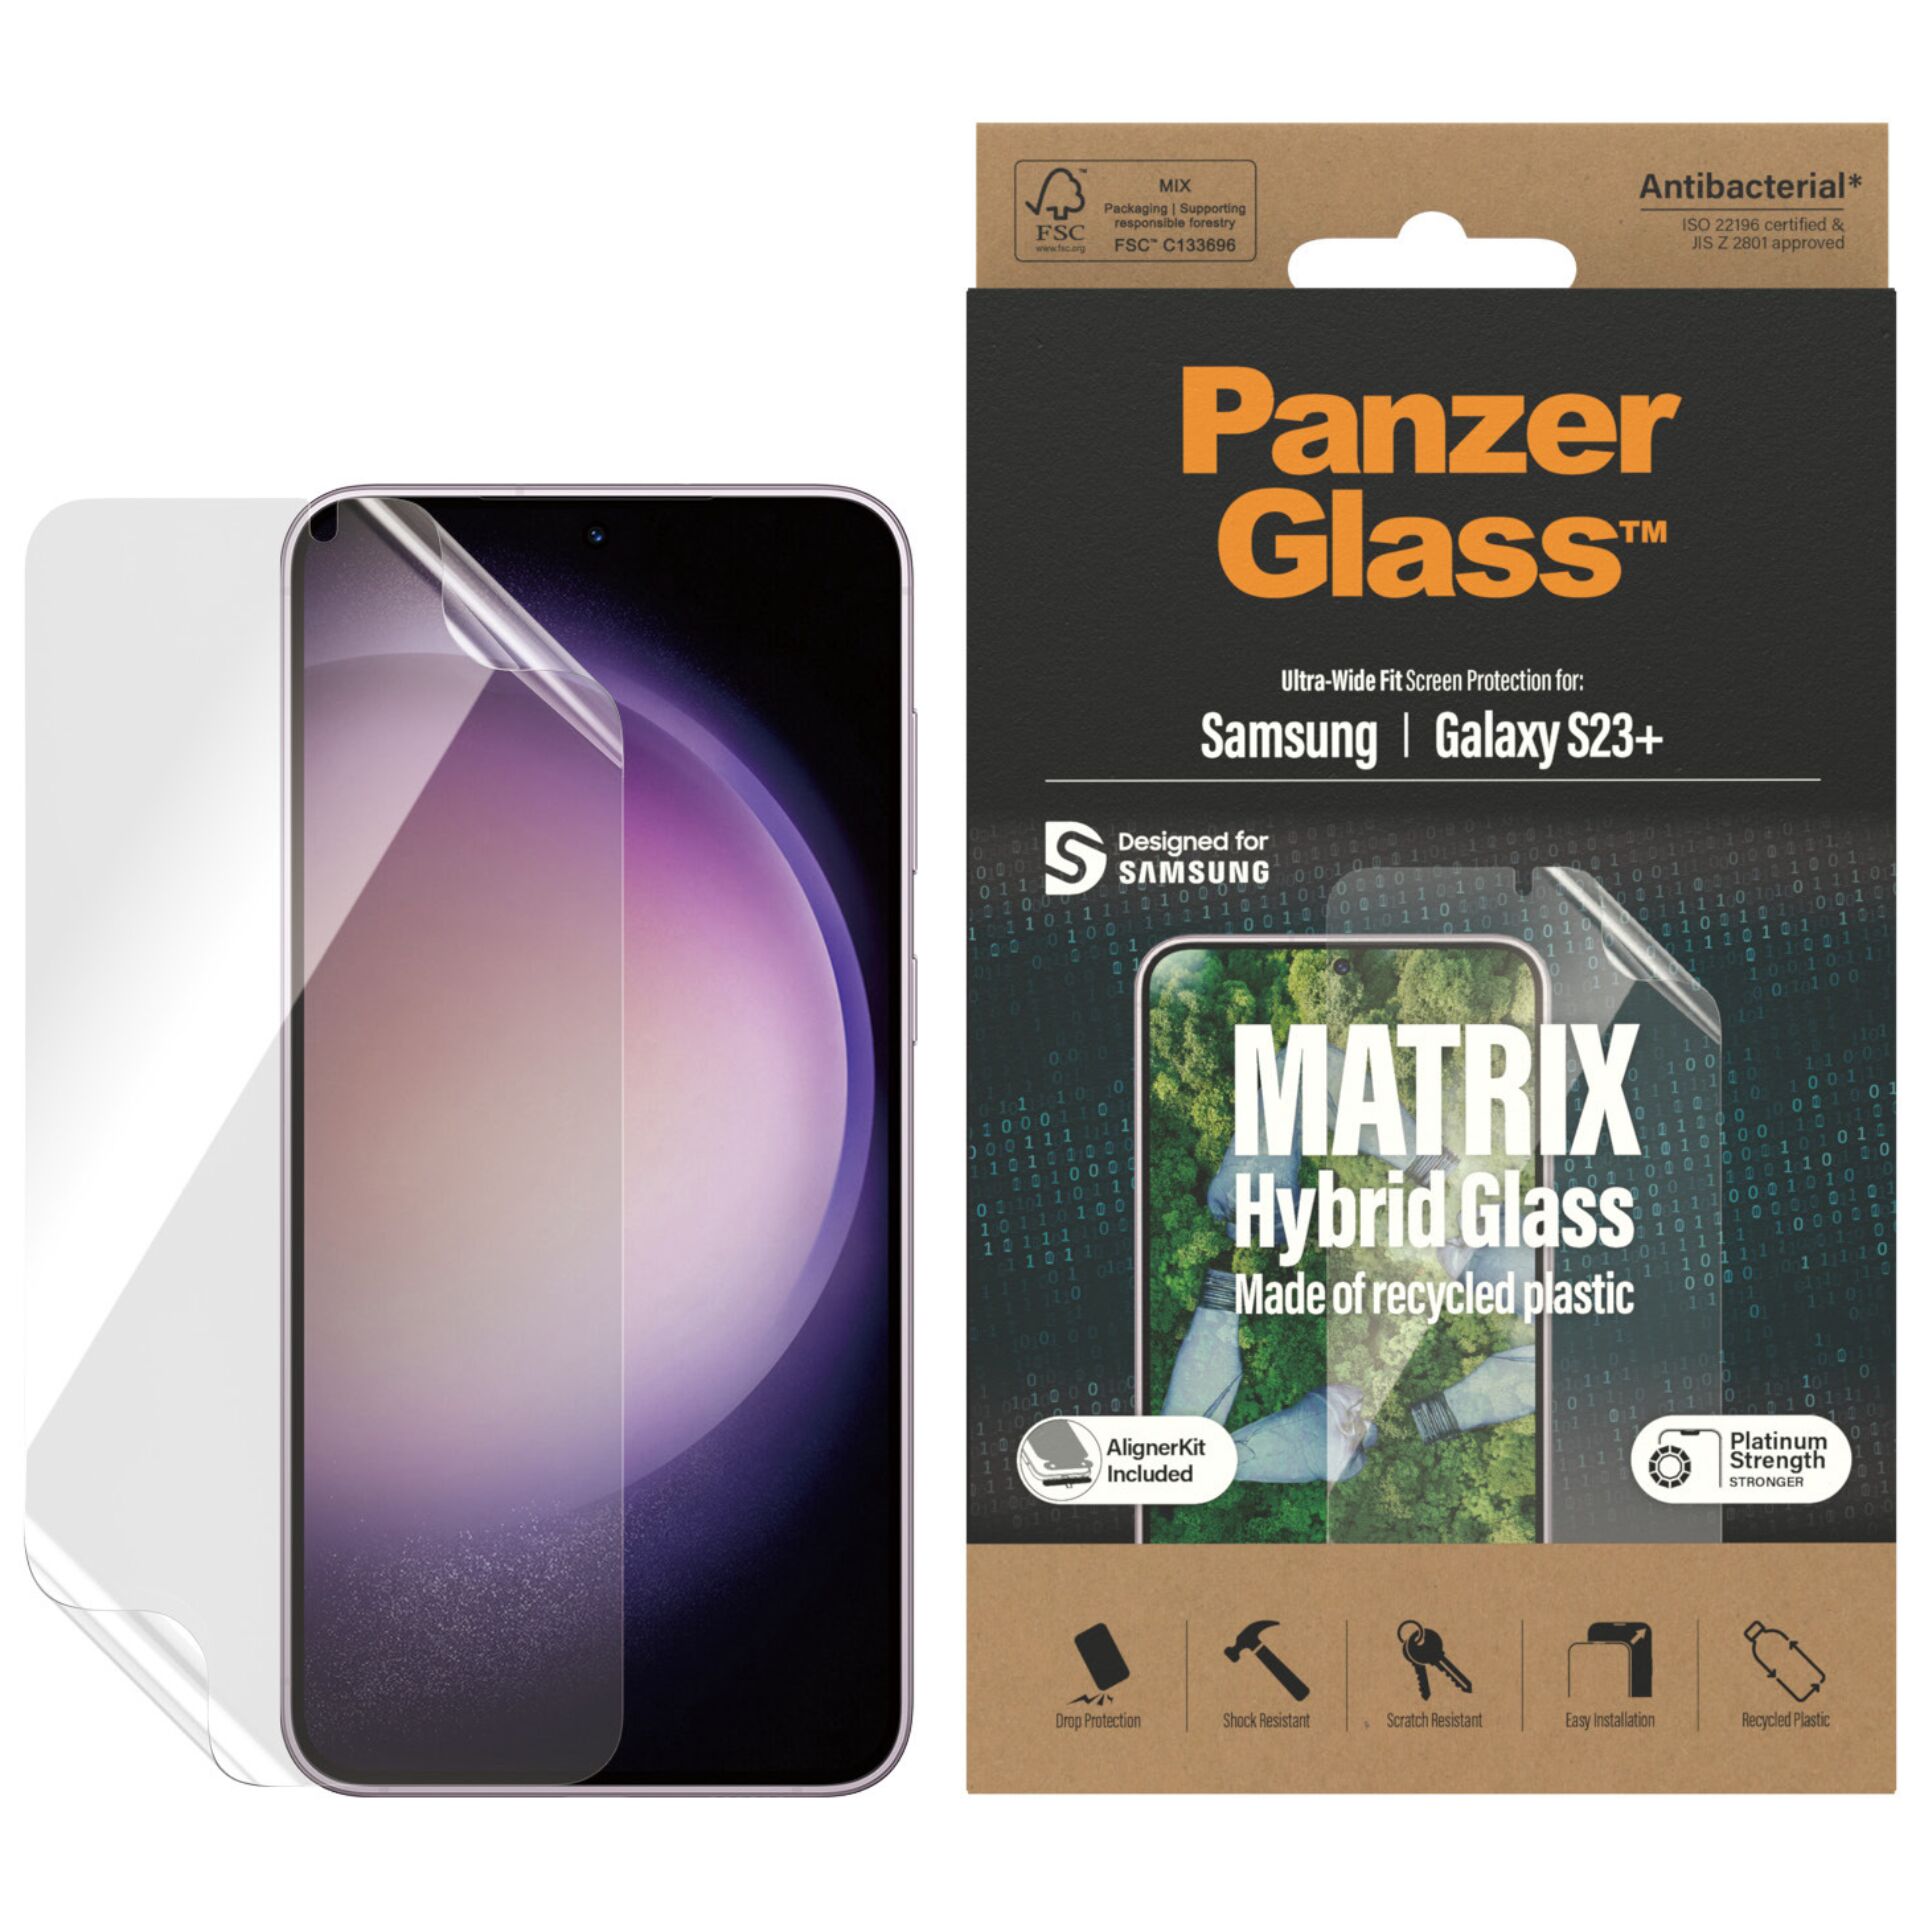 PanzerGlass Matrix Hybrid Glass per Galaxy S23+